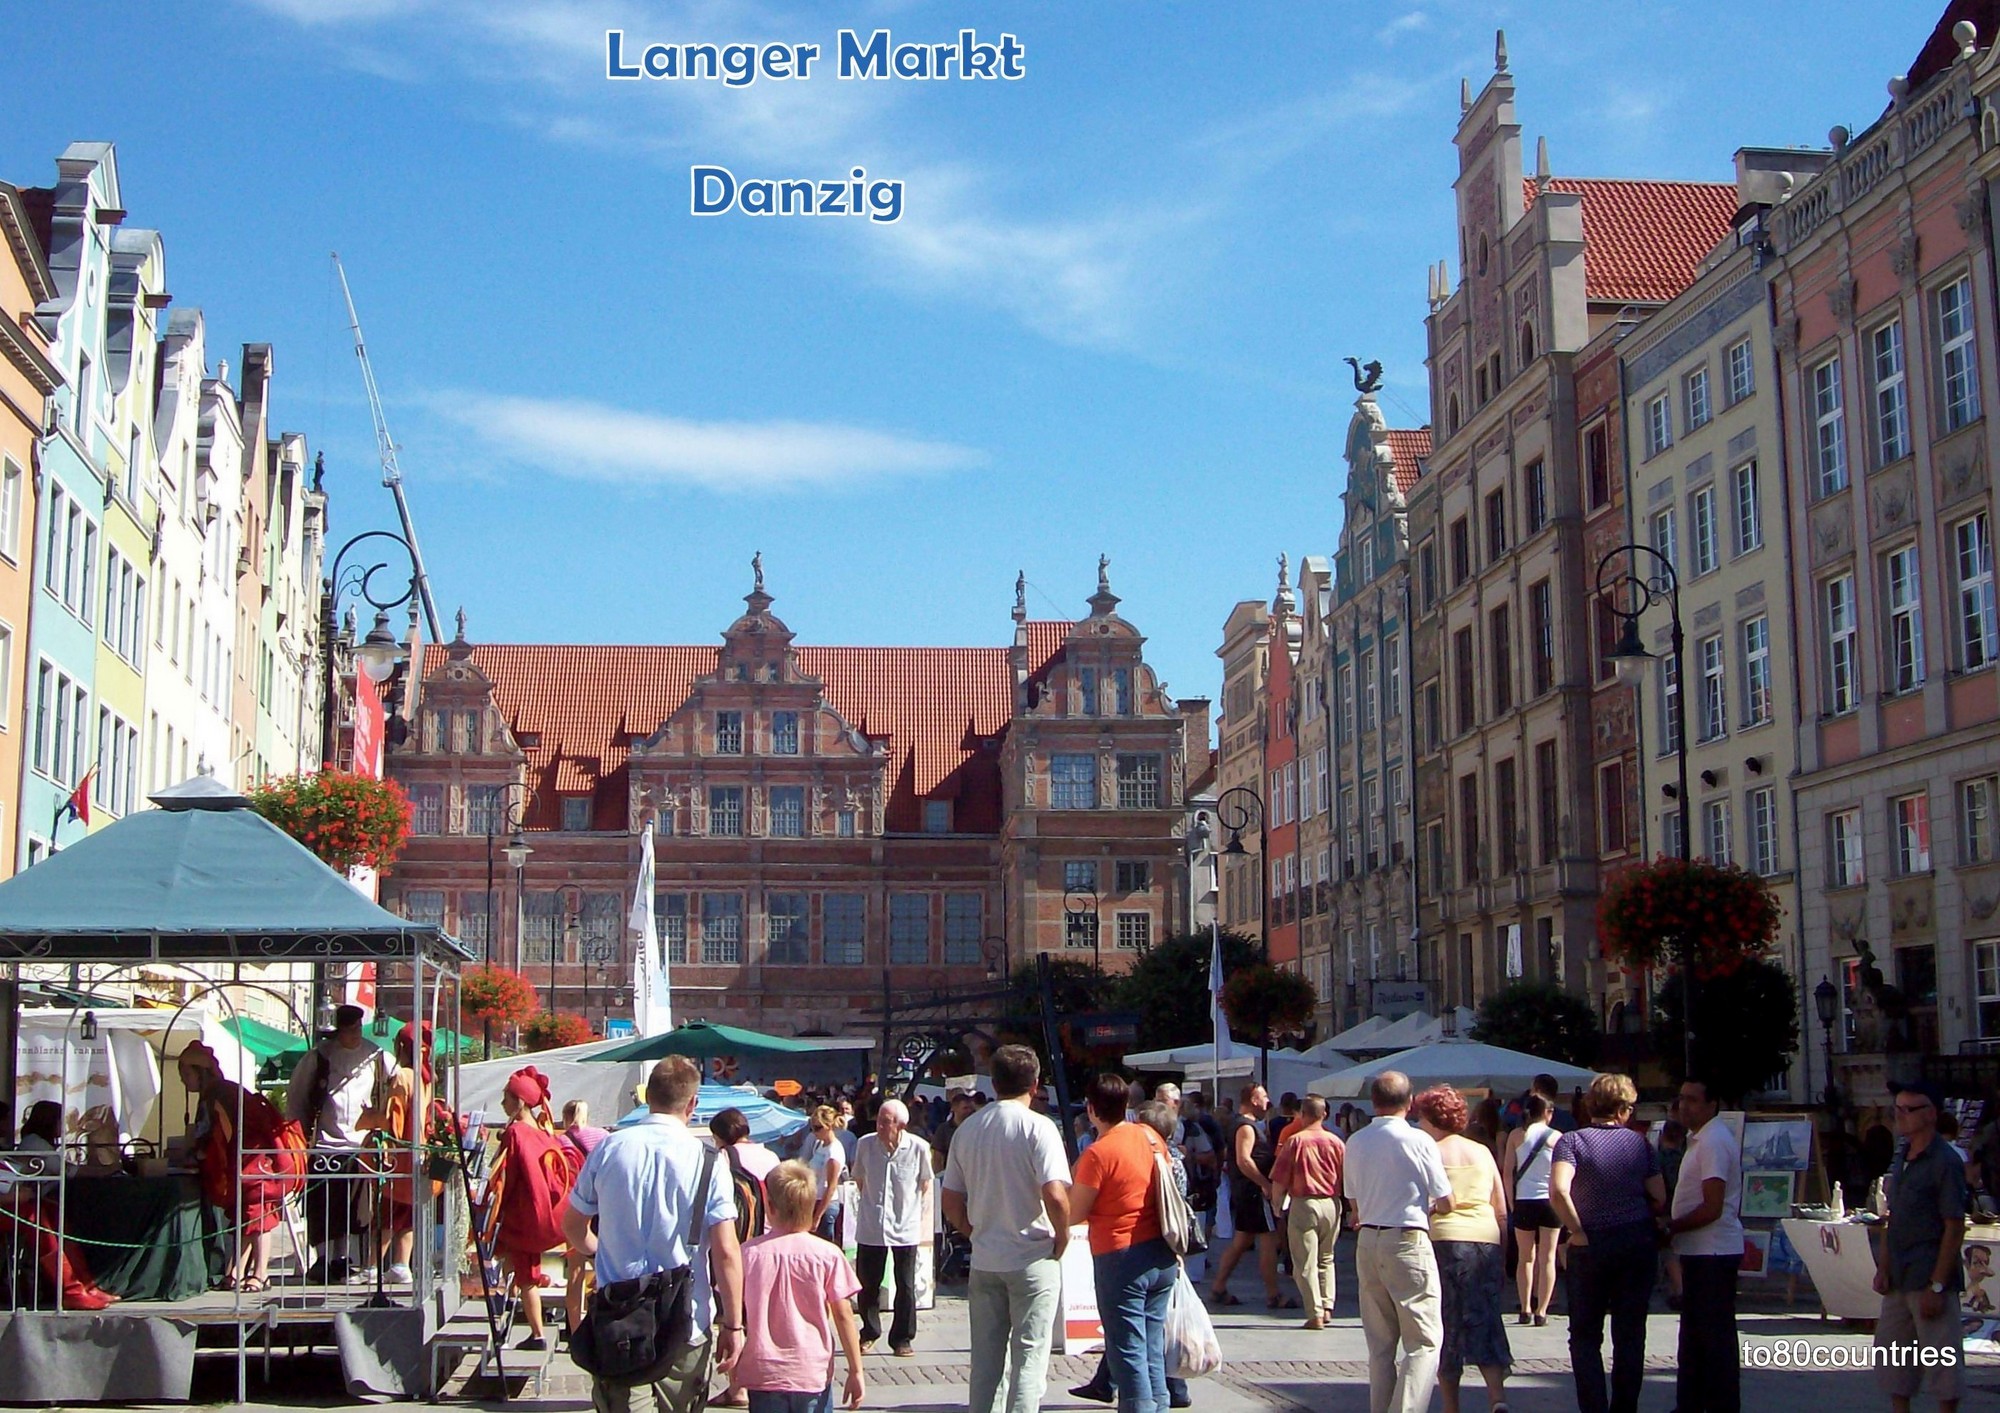 Langer Markt - Danzig